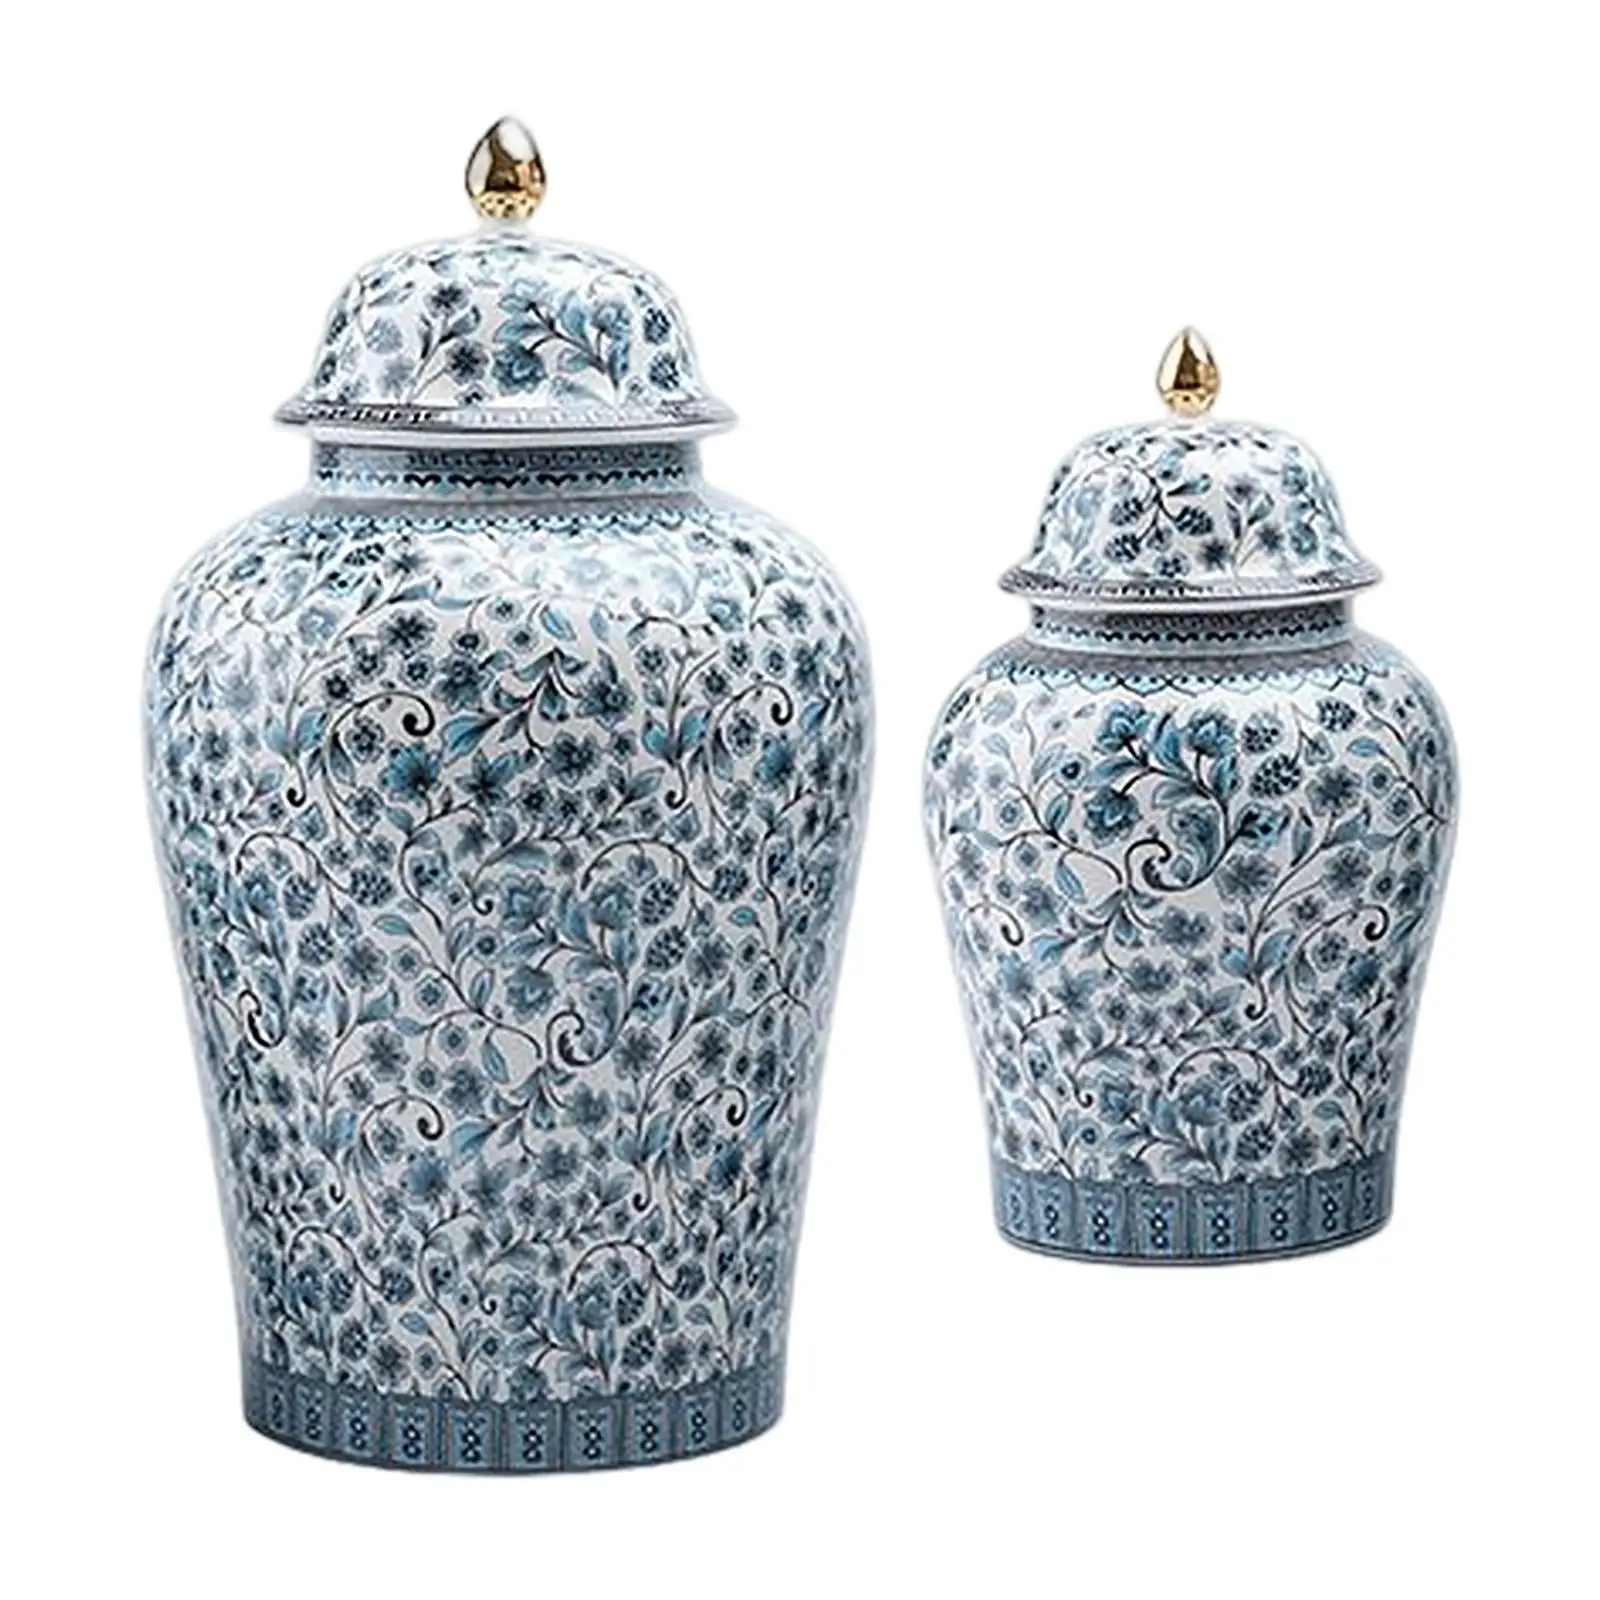 Blue and Bud Vase Ginger Jar with Lid Table Decoration Glazed